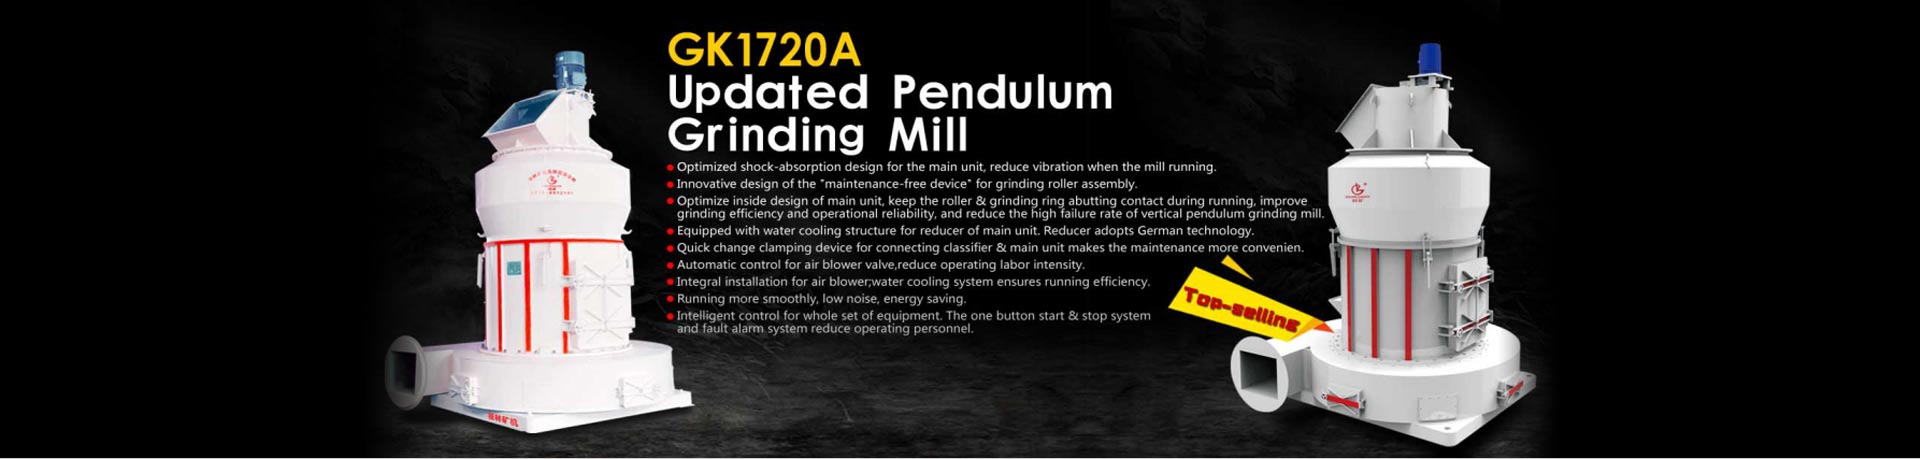 Pendulum grinding mill